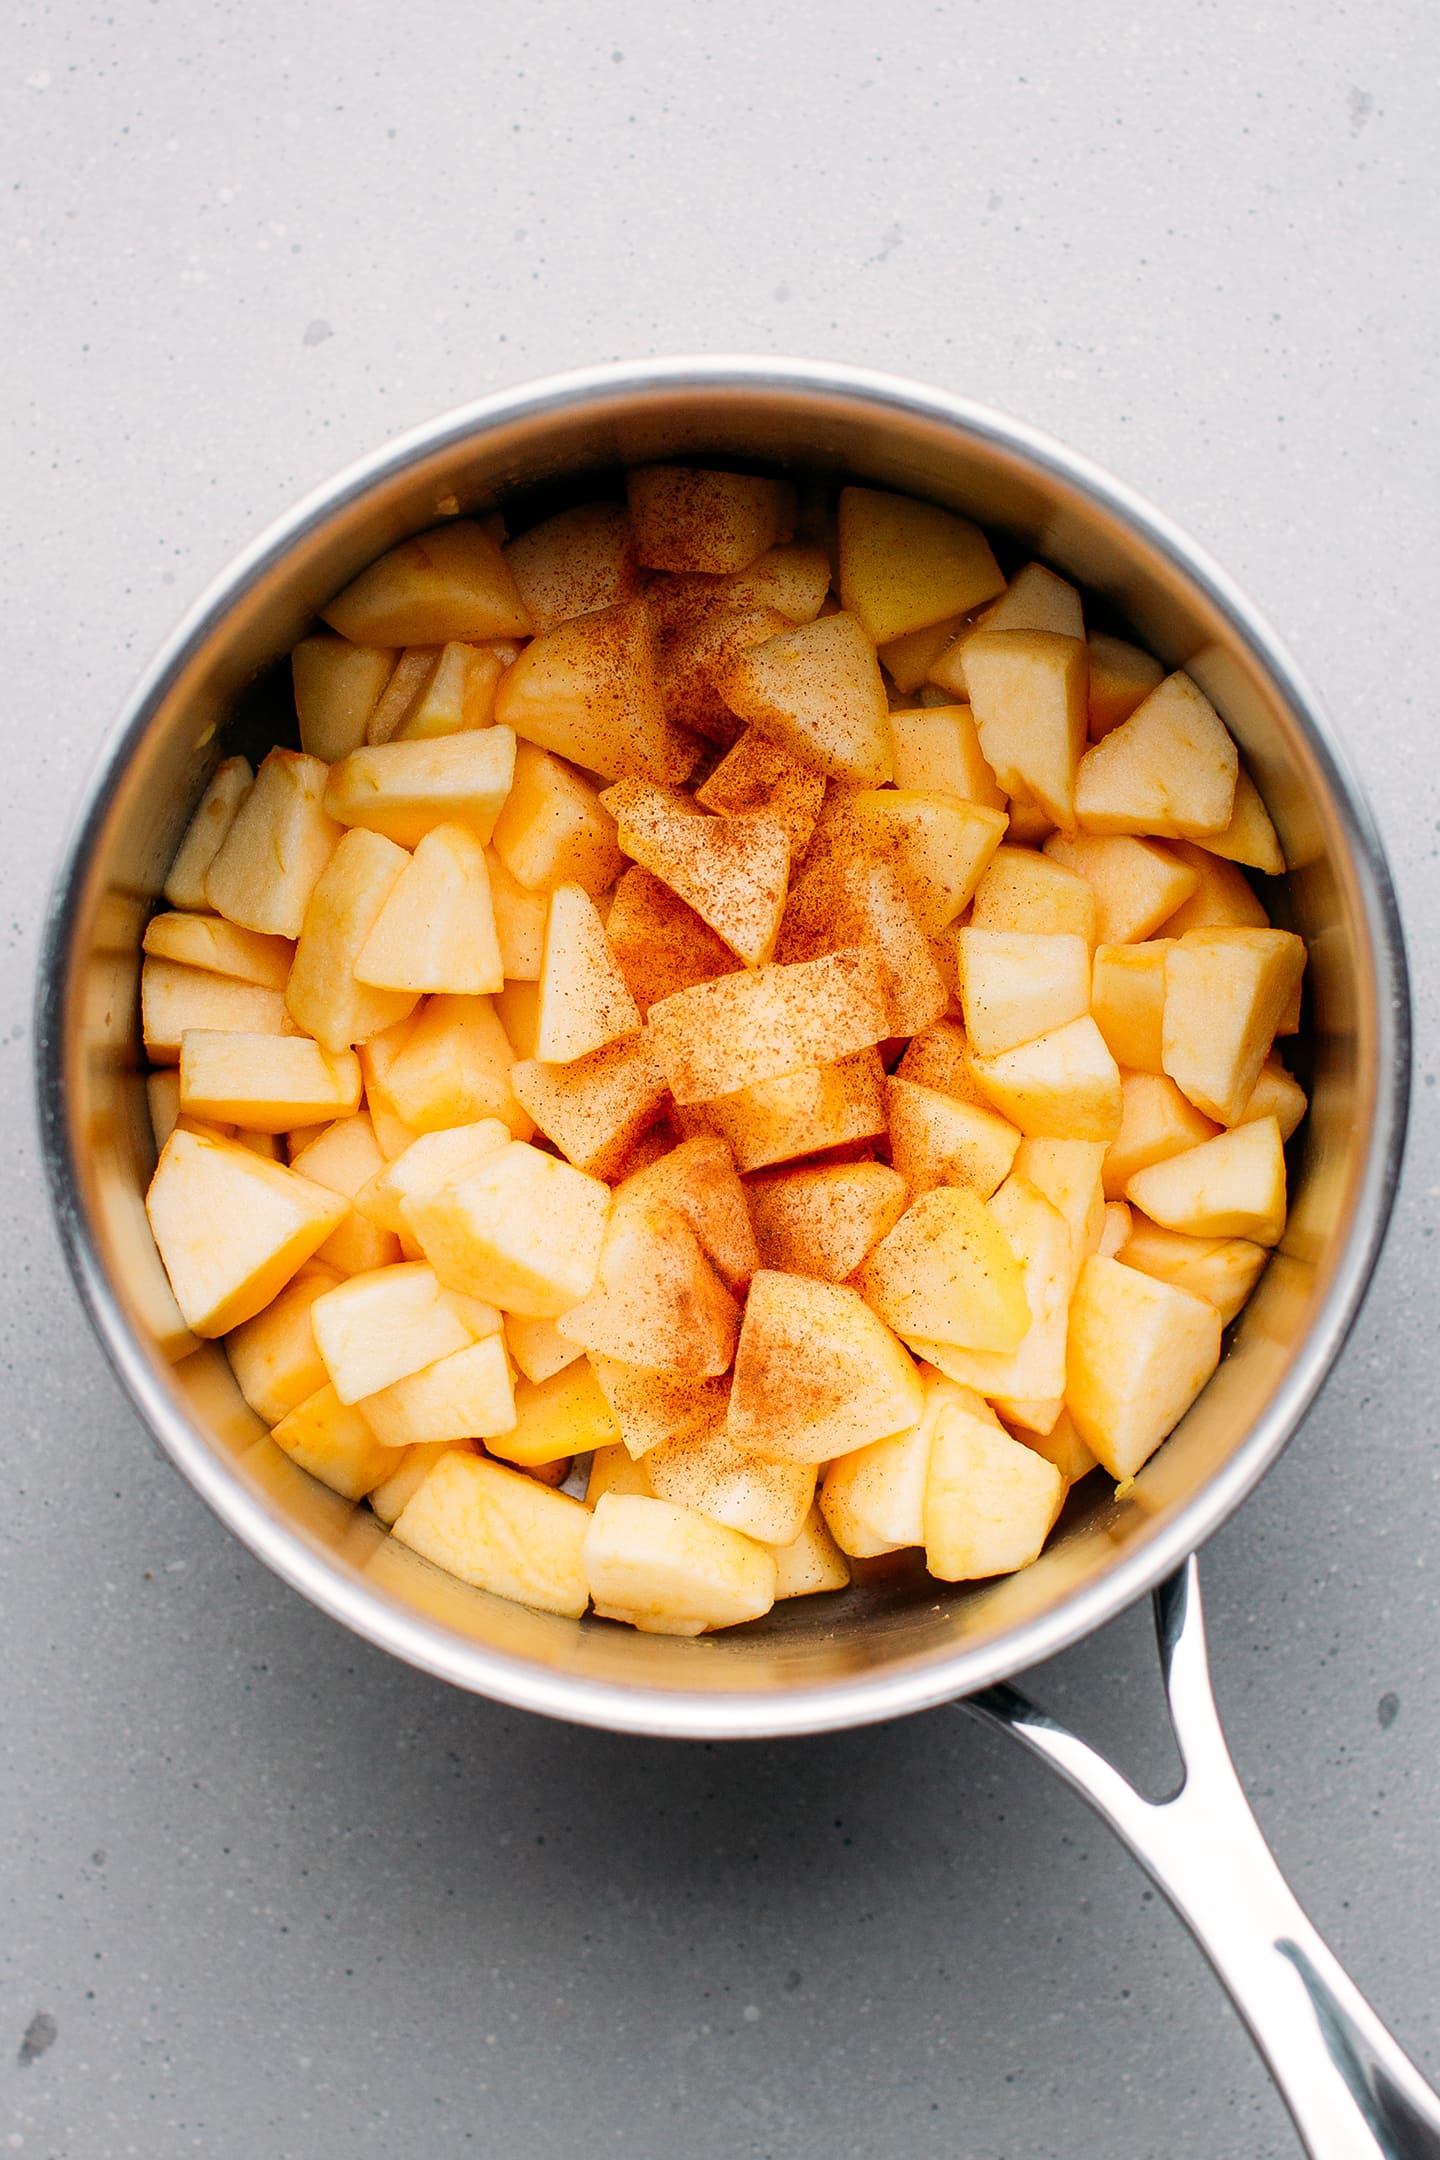 Diced apples in a saucepan.